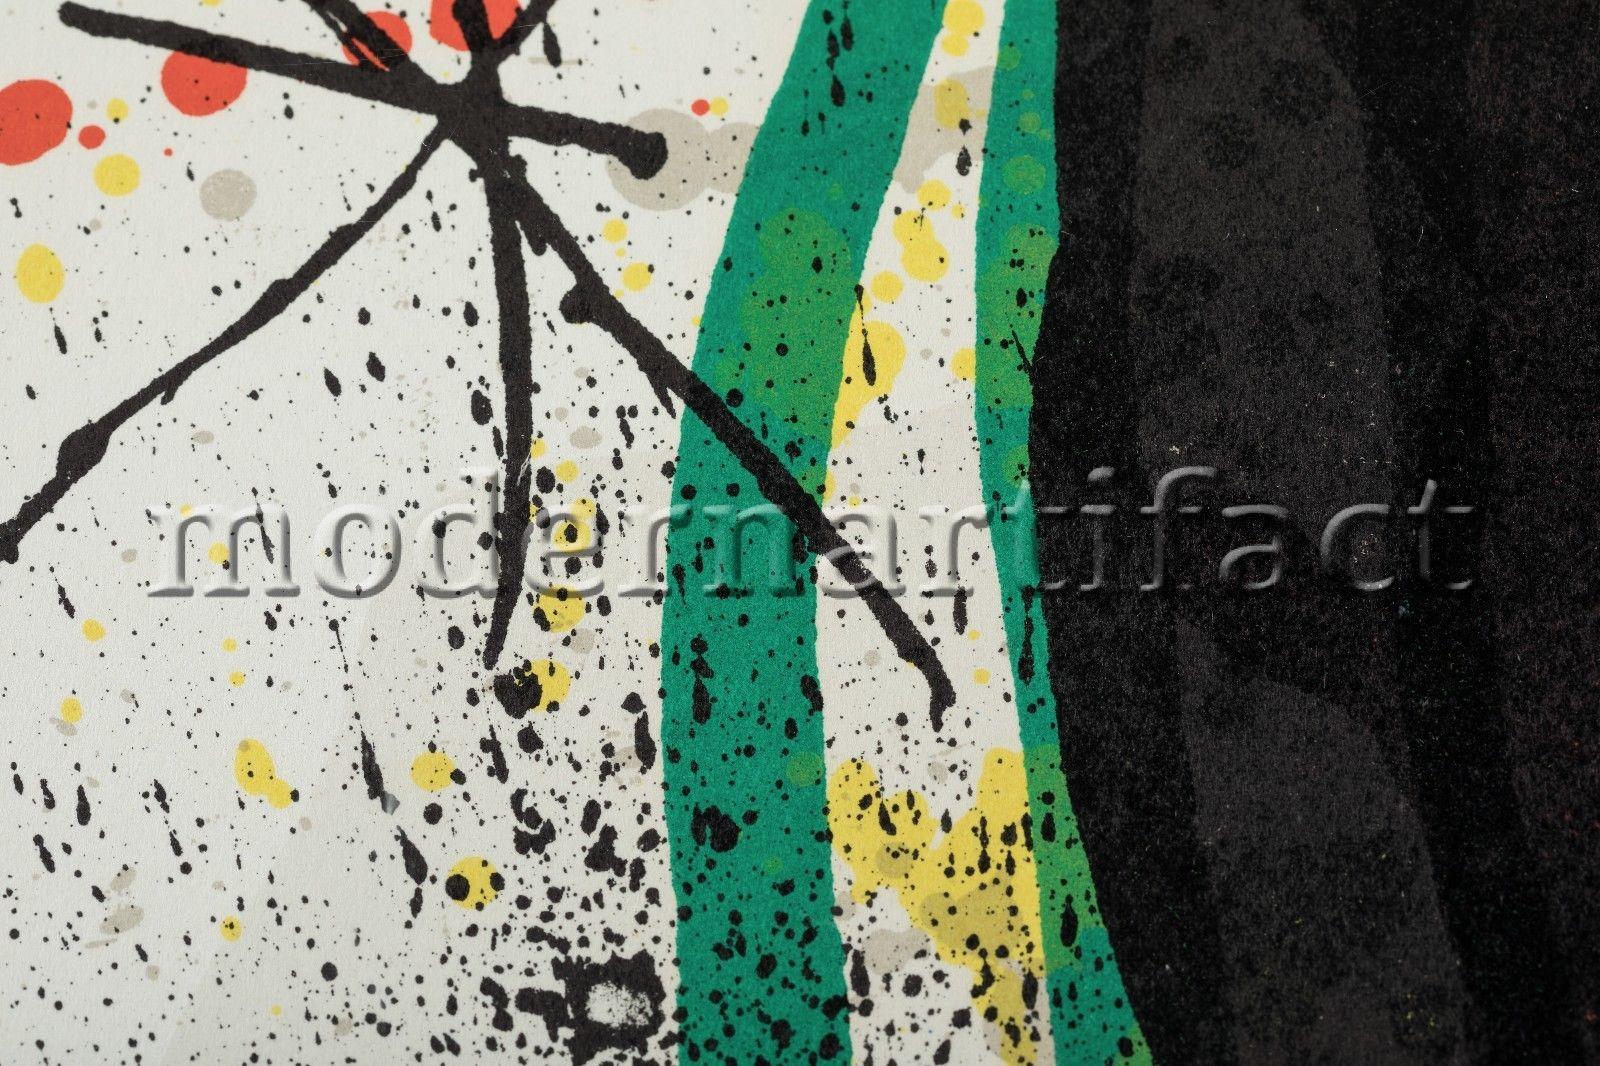 Artist: Joan Miro
Medium: Lithograph in Color
Title:  Sobreteixims Exhibition
Size: 33